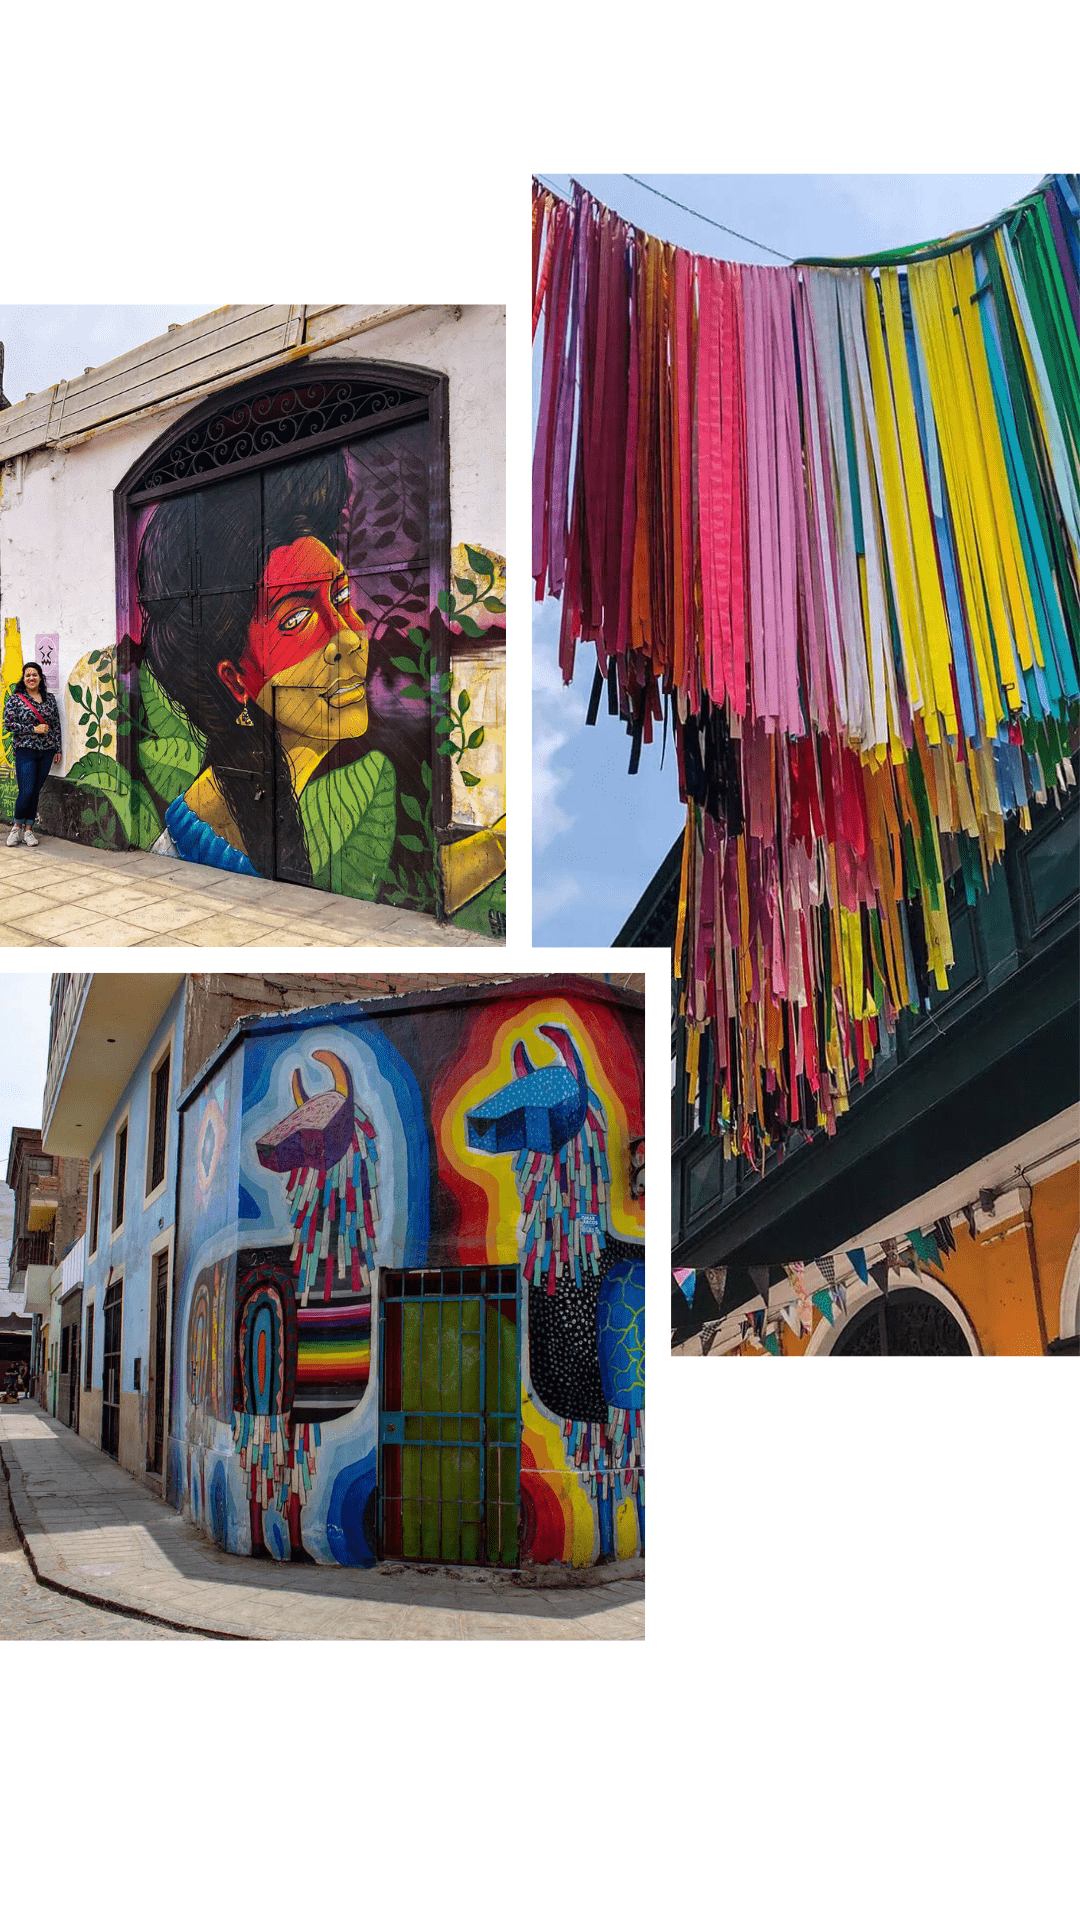 Callao Urban Art, Lima mal anders